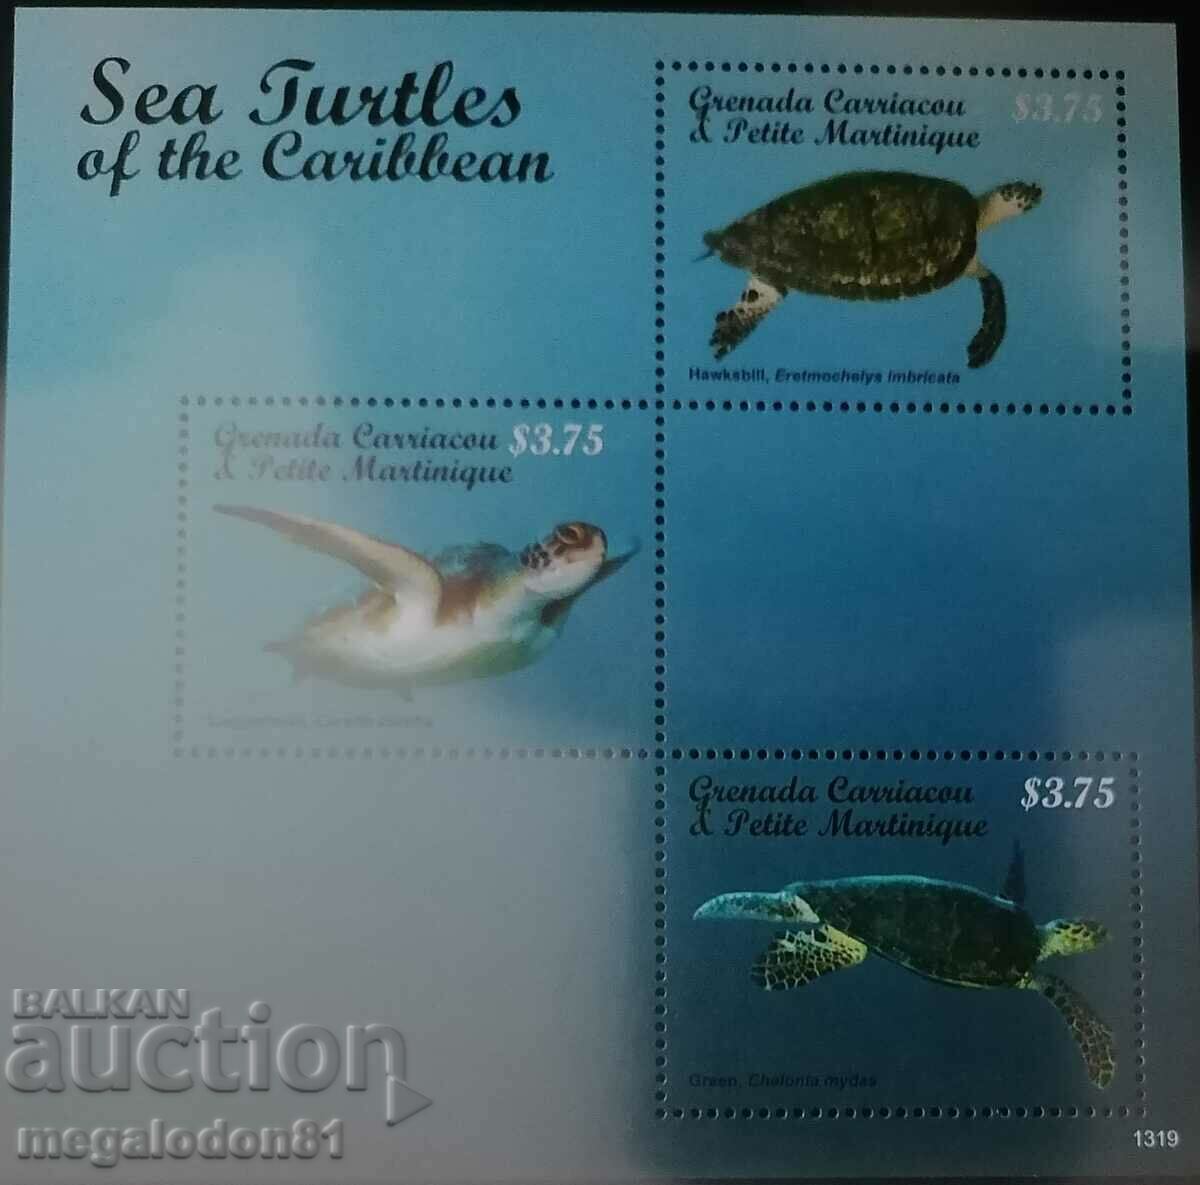 Grenada Curaçao și Petite Martinique - țestoase marine